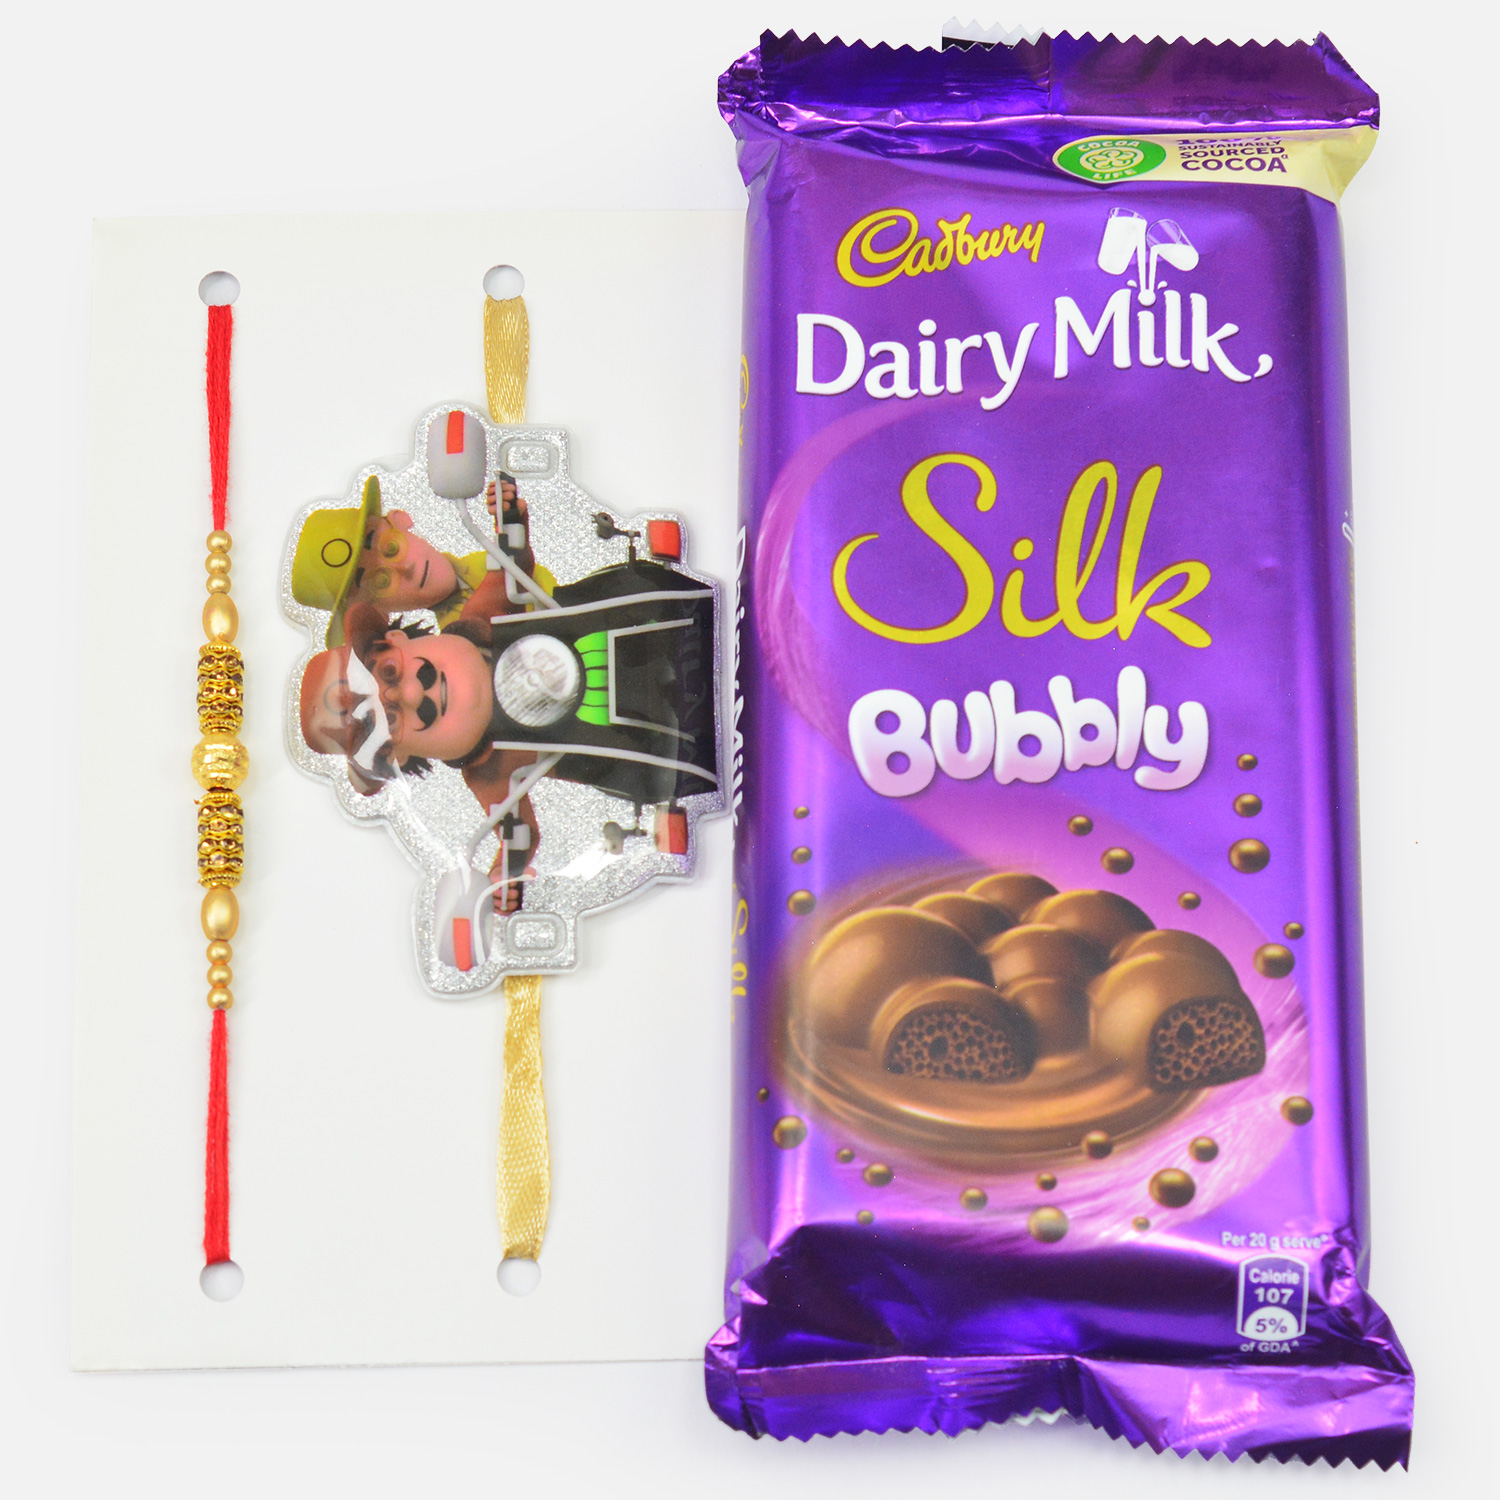 Motu Patlu Kids Rakhi with Bhai Rakhi and Bubbly Silk Chocolate By Cadbury